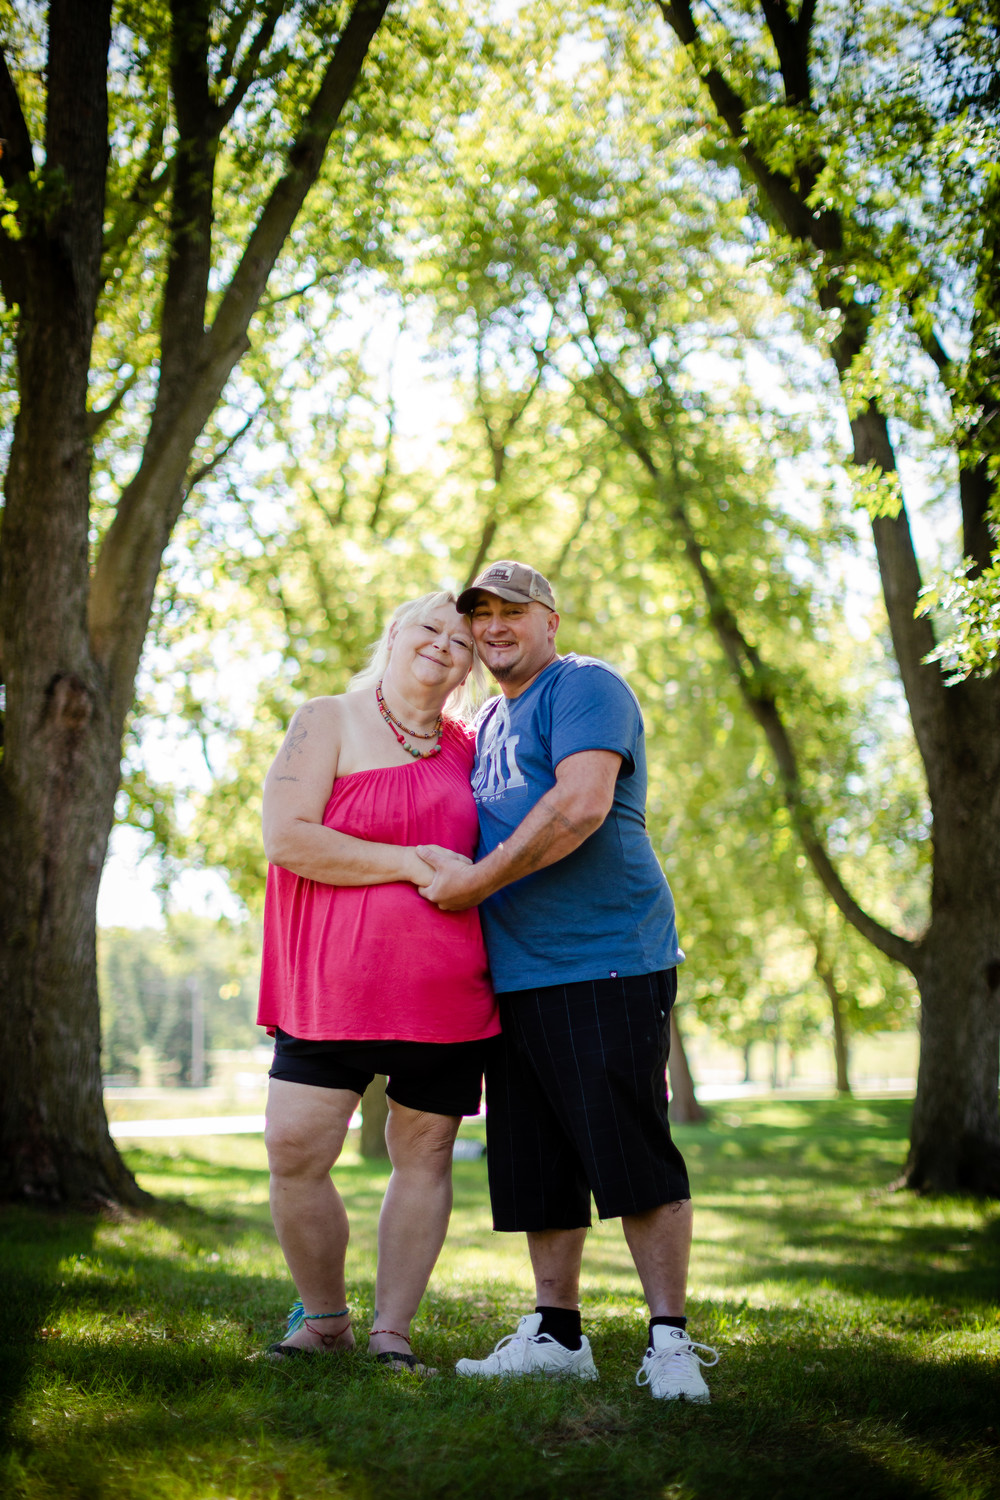 Methodist bariatric program patient Tammy Kroft with her husband, Jordan